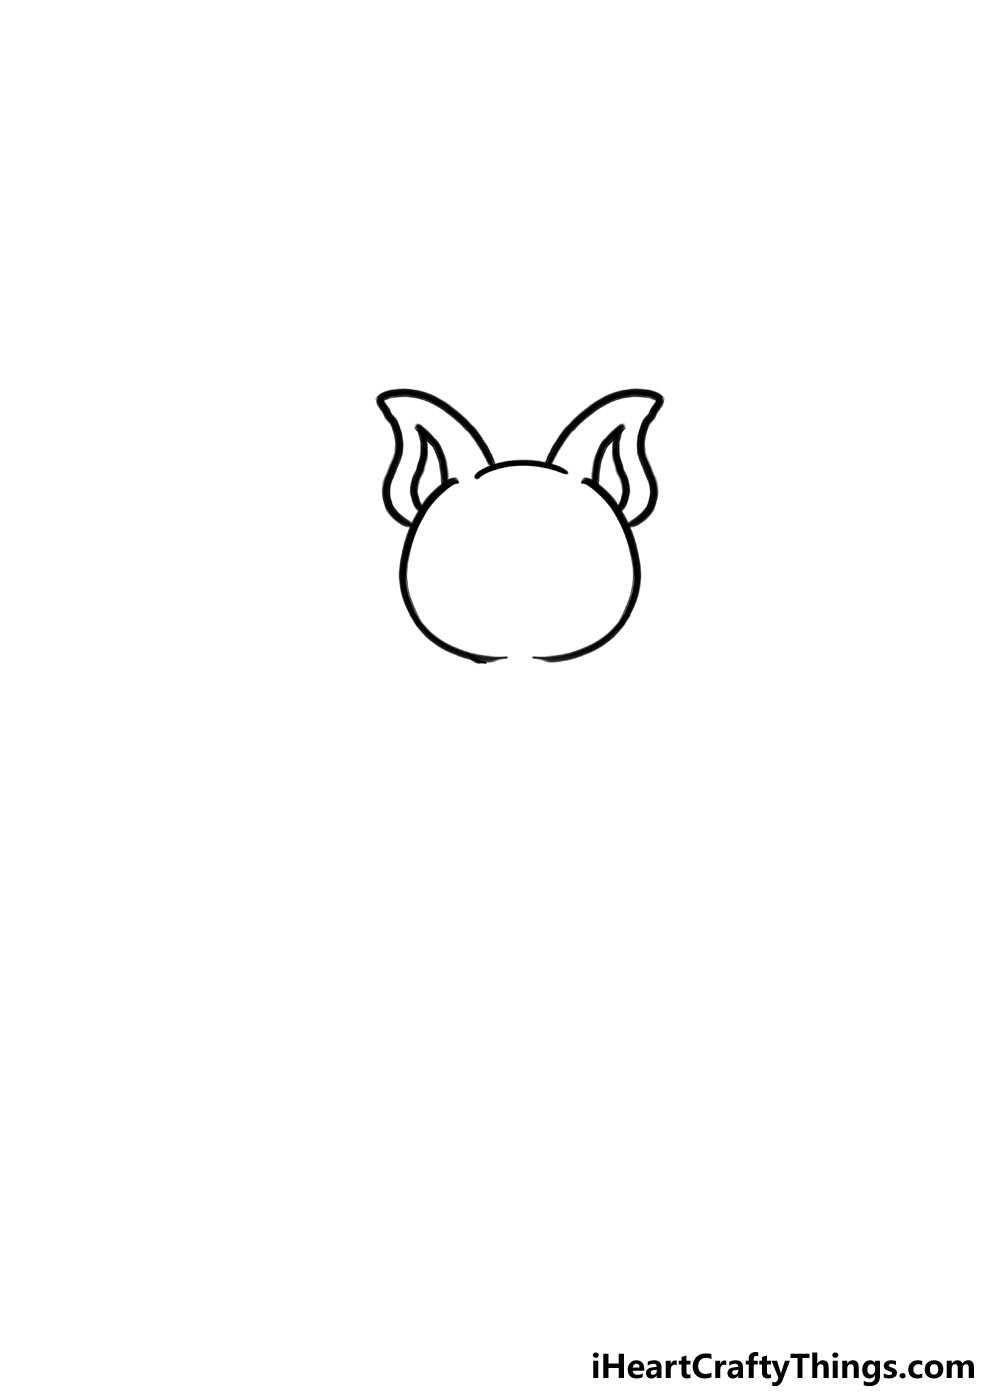 How to Draw A Cute Bat step 2